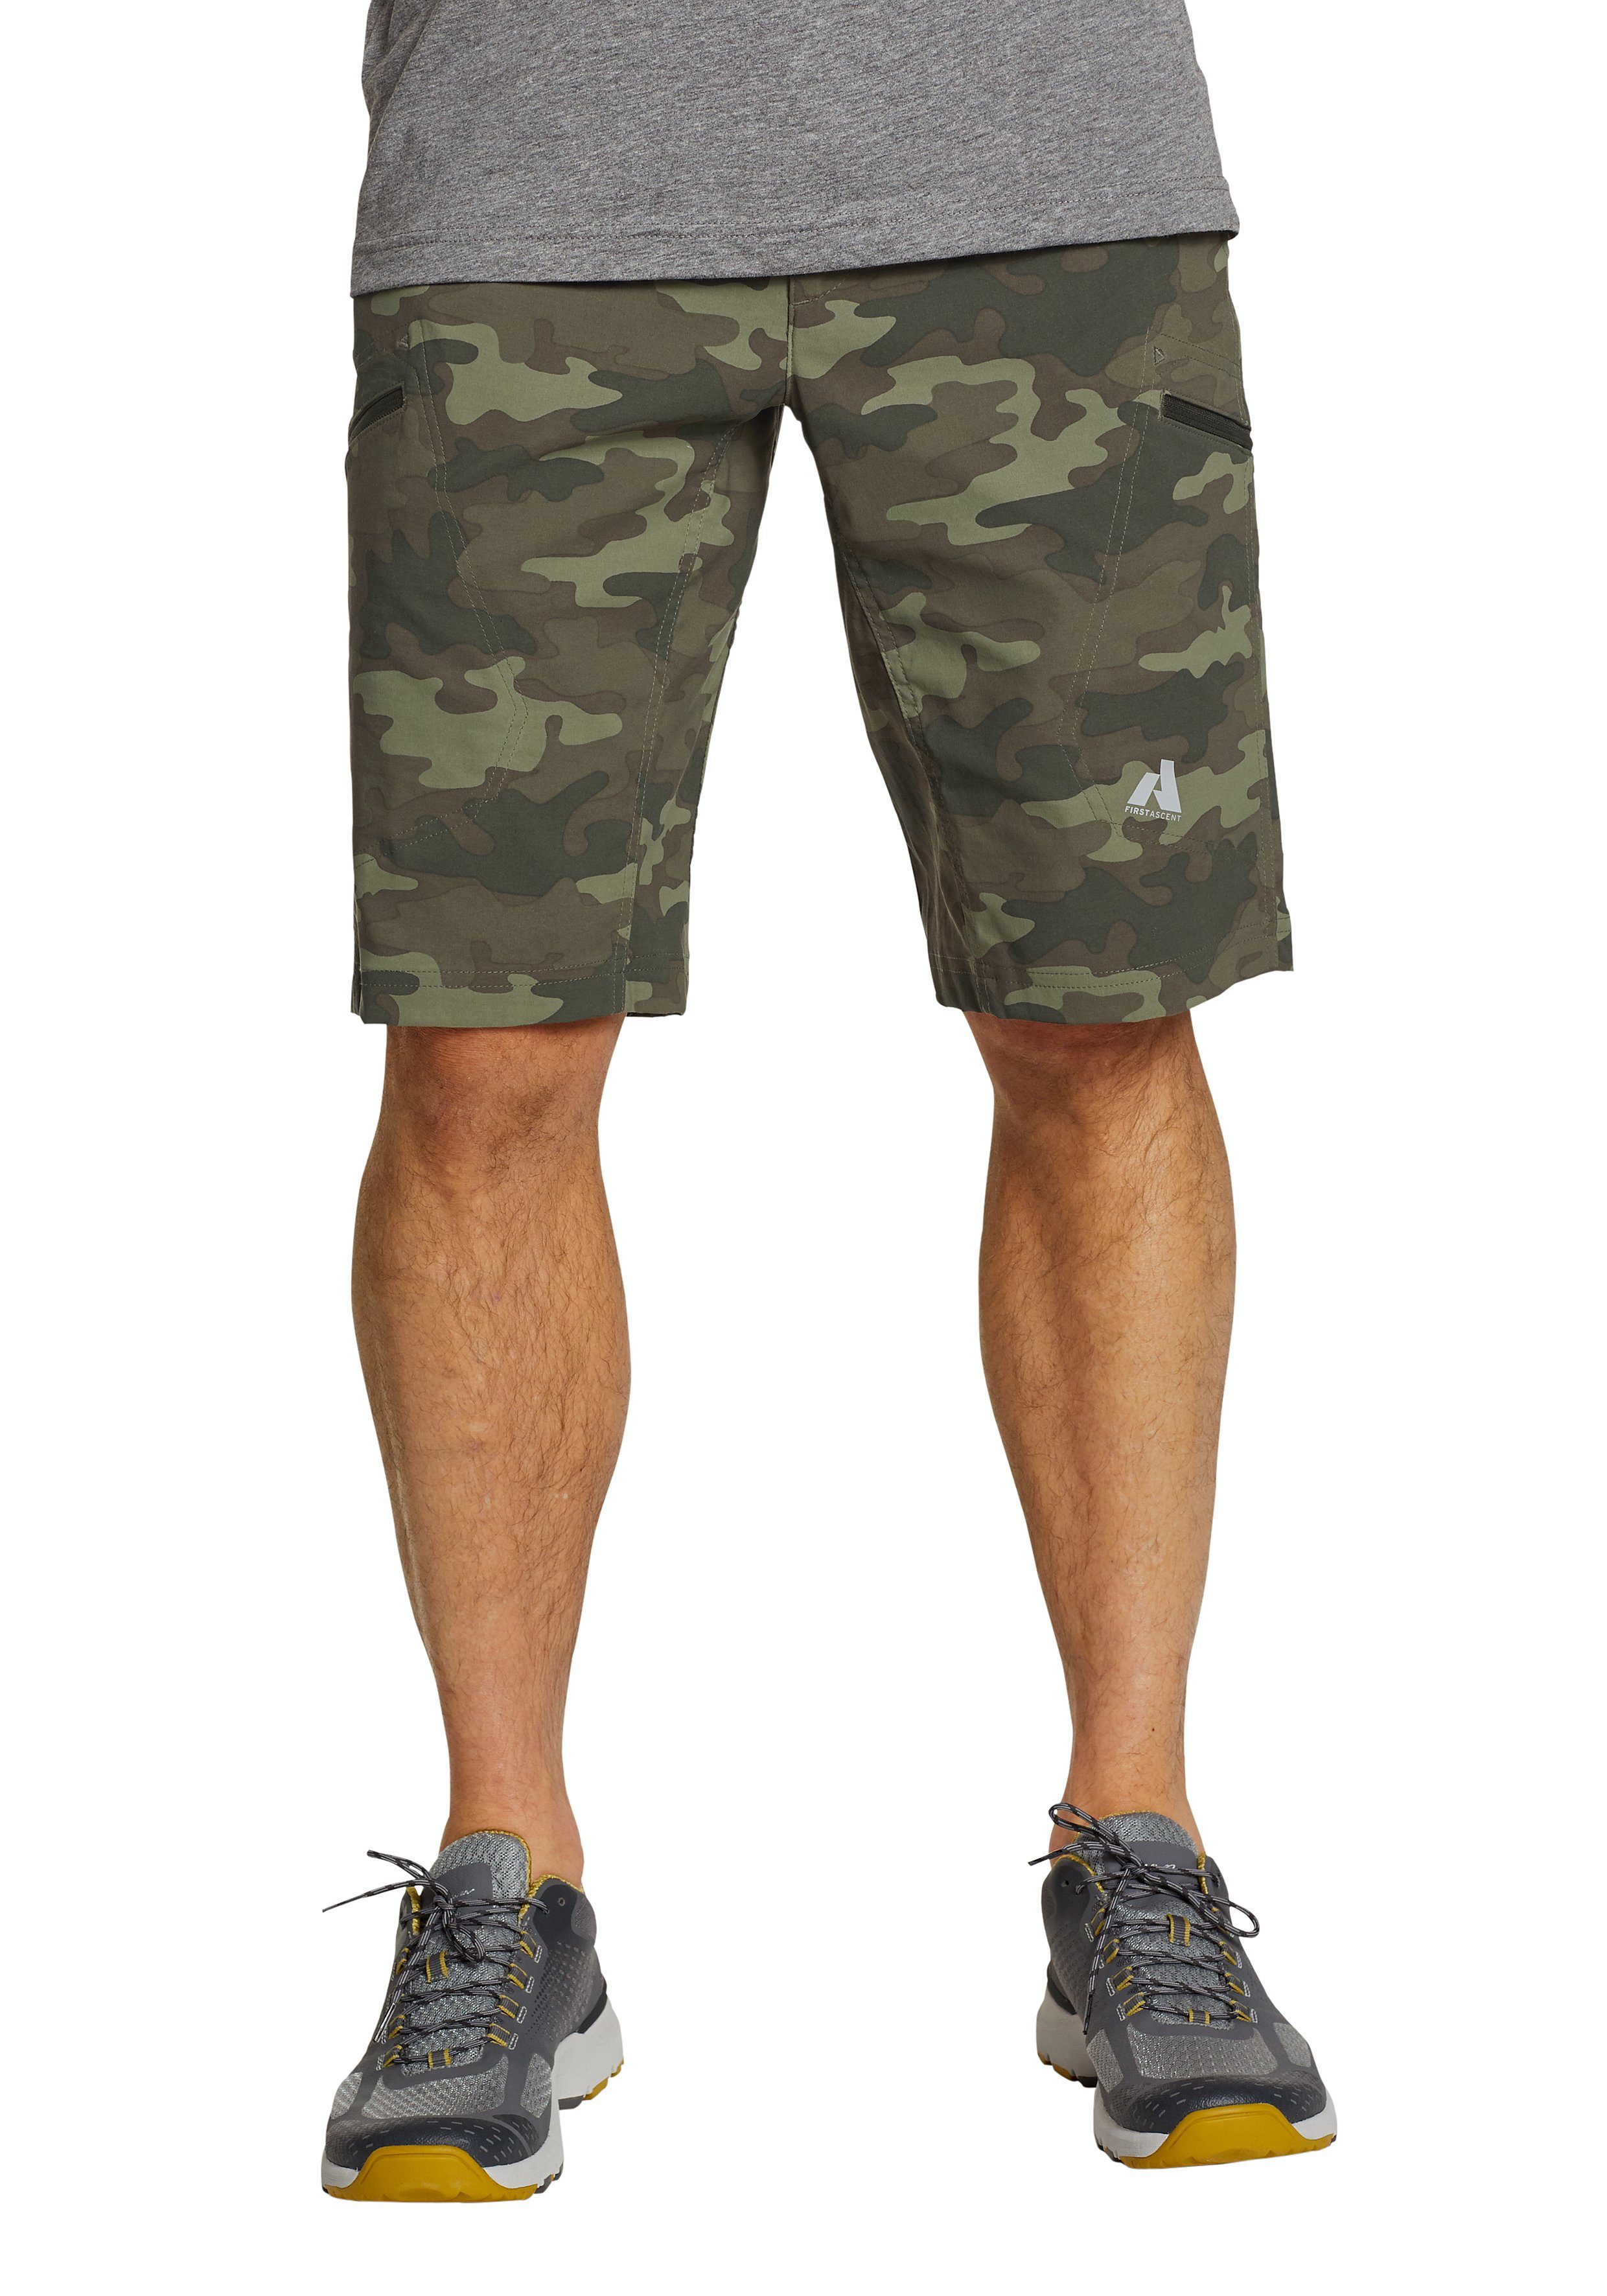 Eddie Bauer Shorts Guide Pro Shorts - gemustert Camouflage